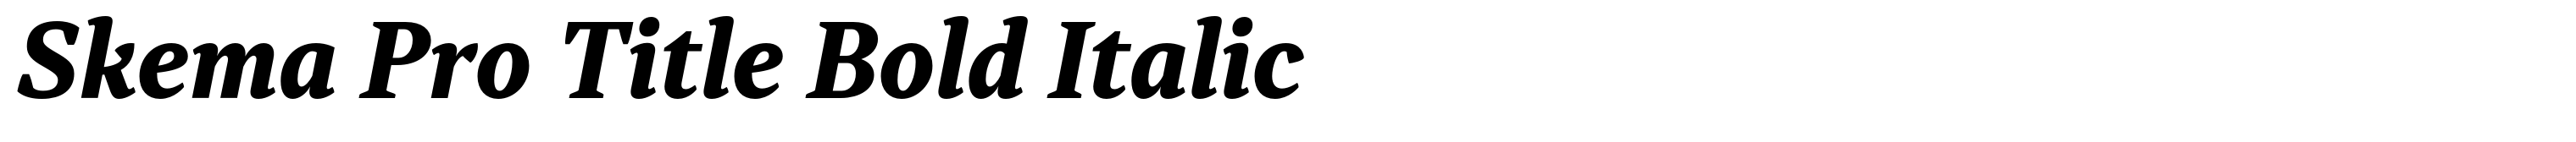 Skema Pro Title Bold Italic